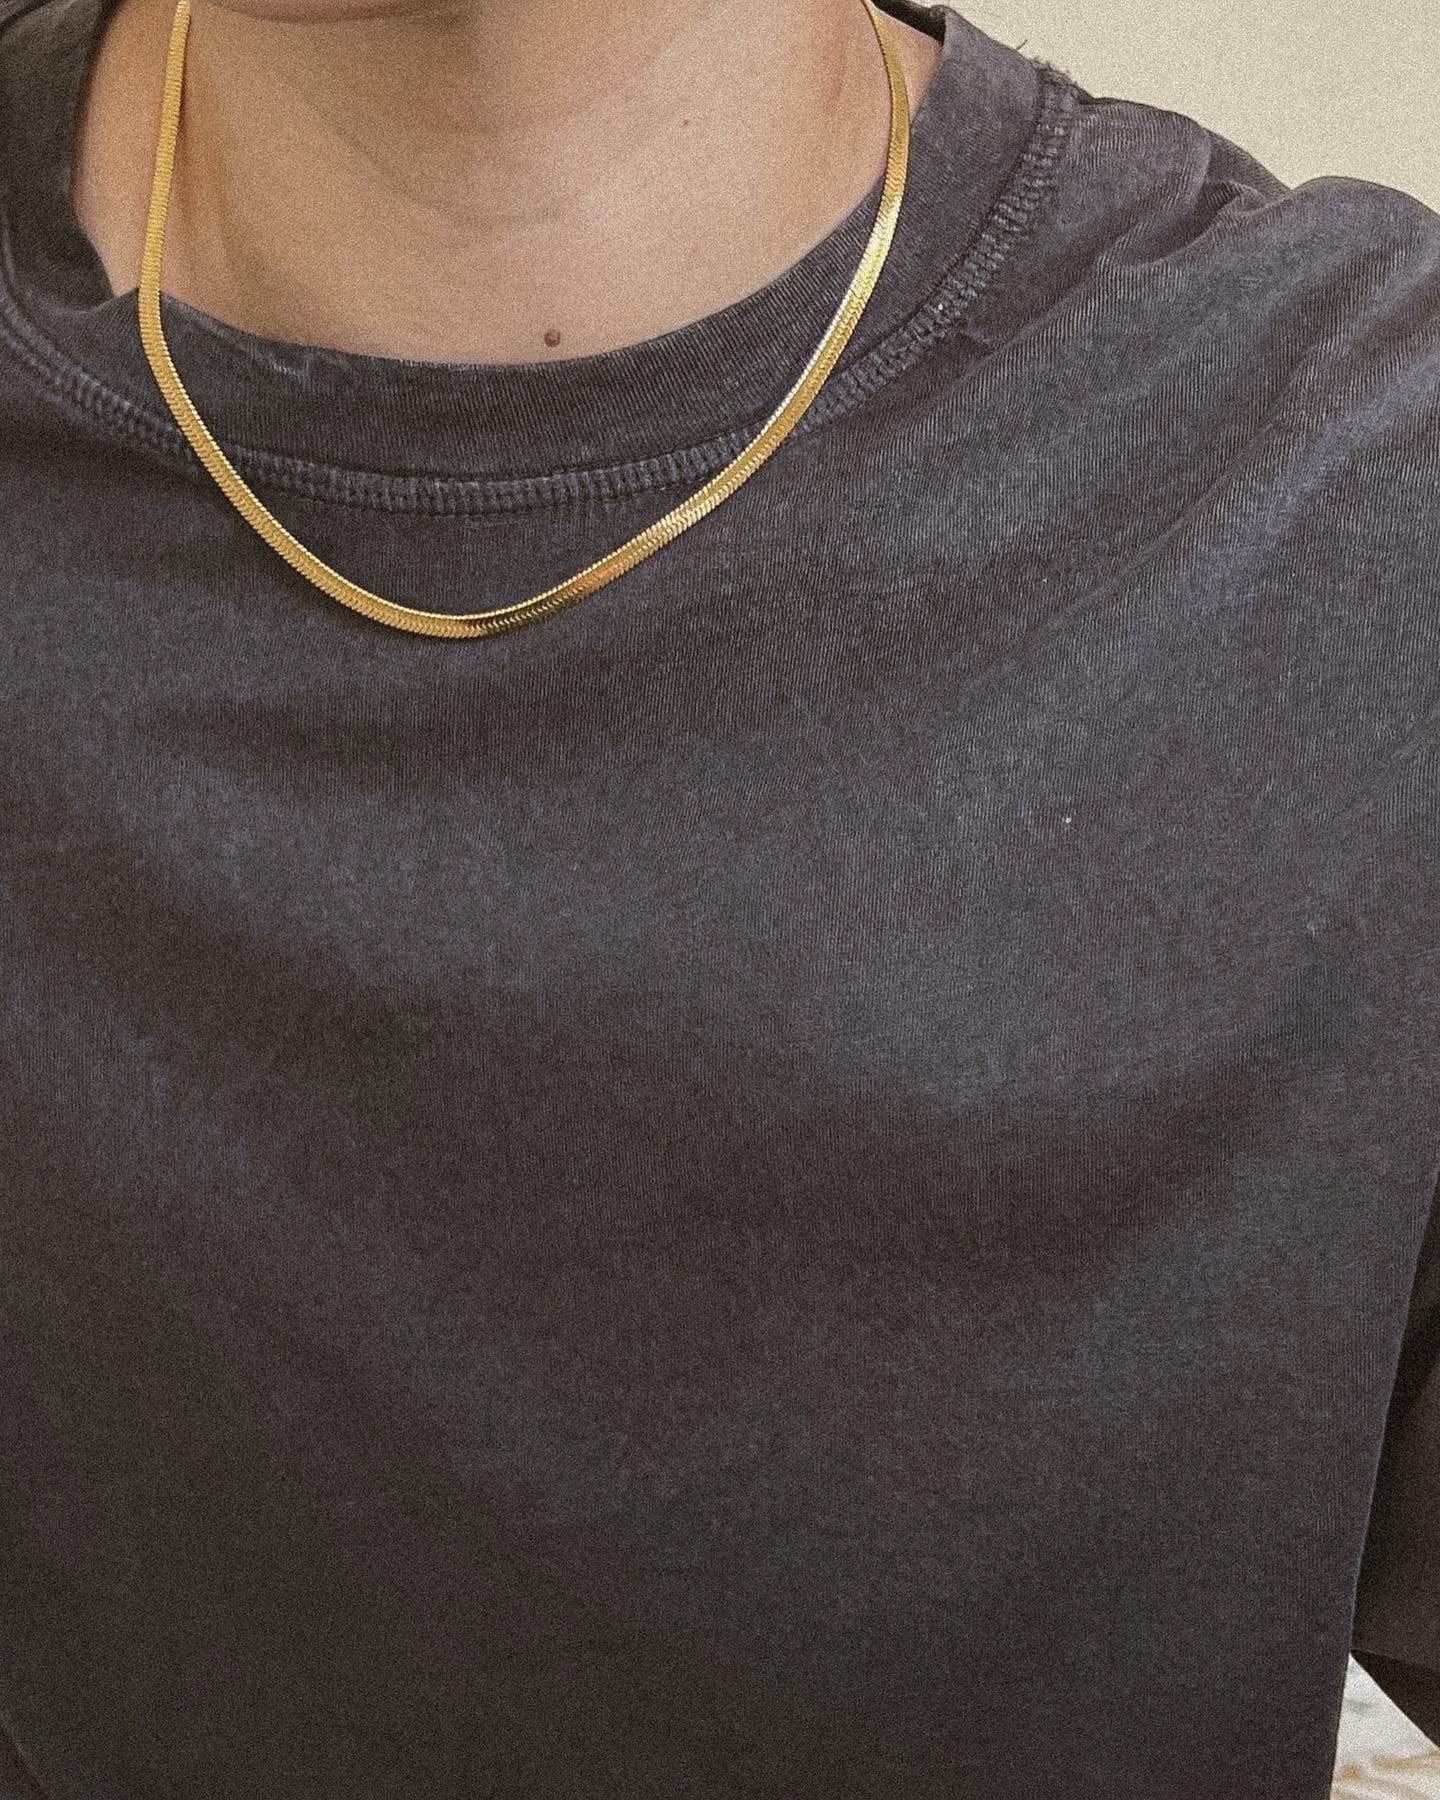 Hazel Gold Herringbone Chain Necklace